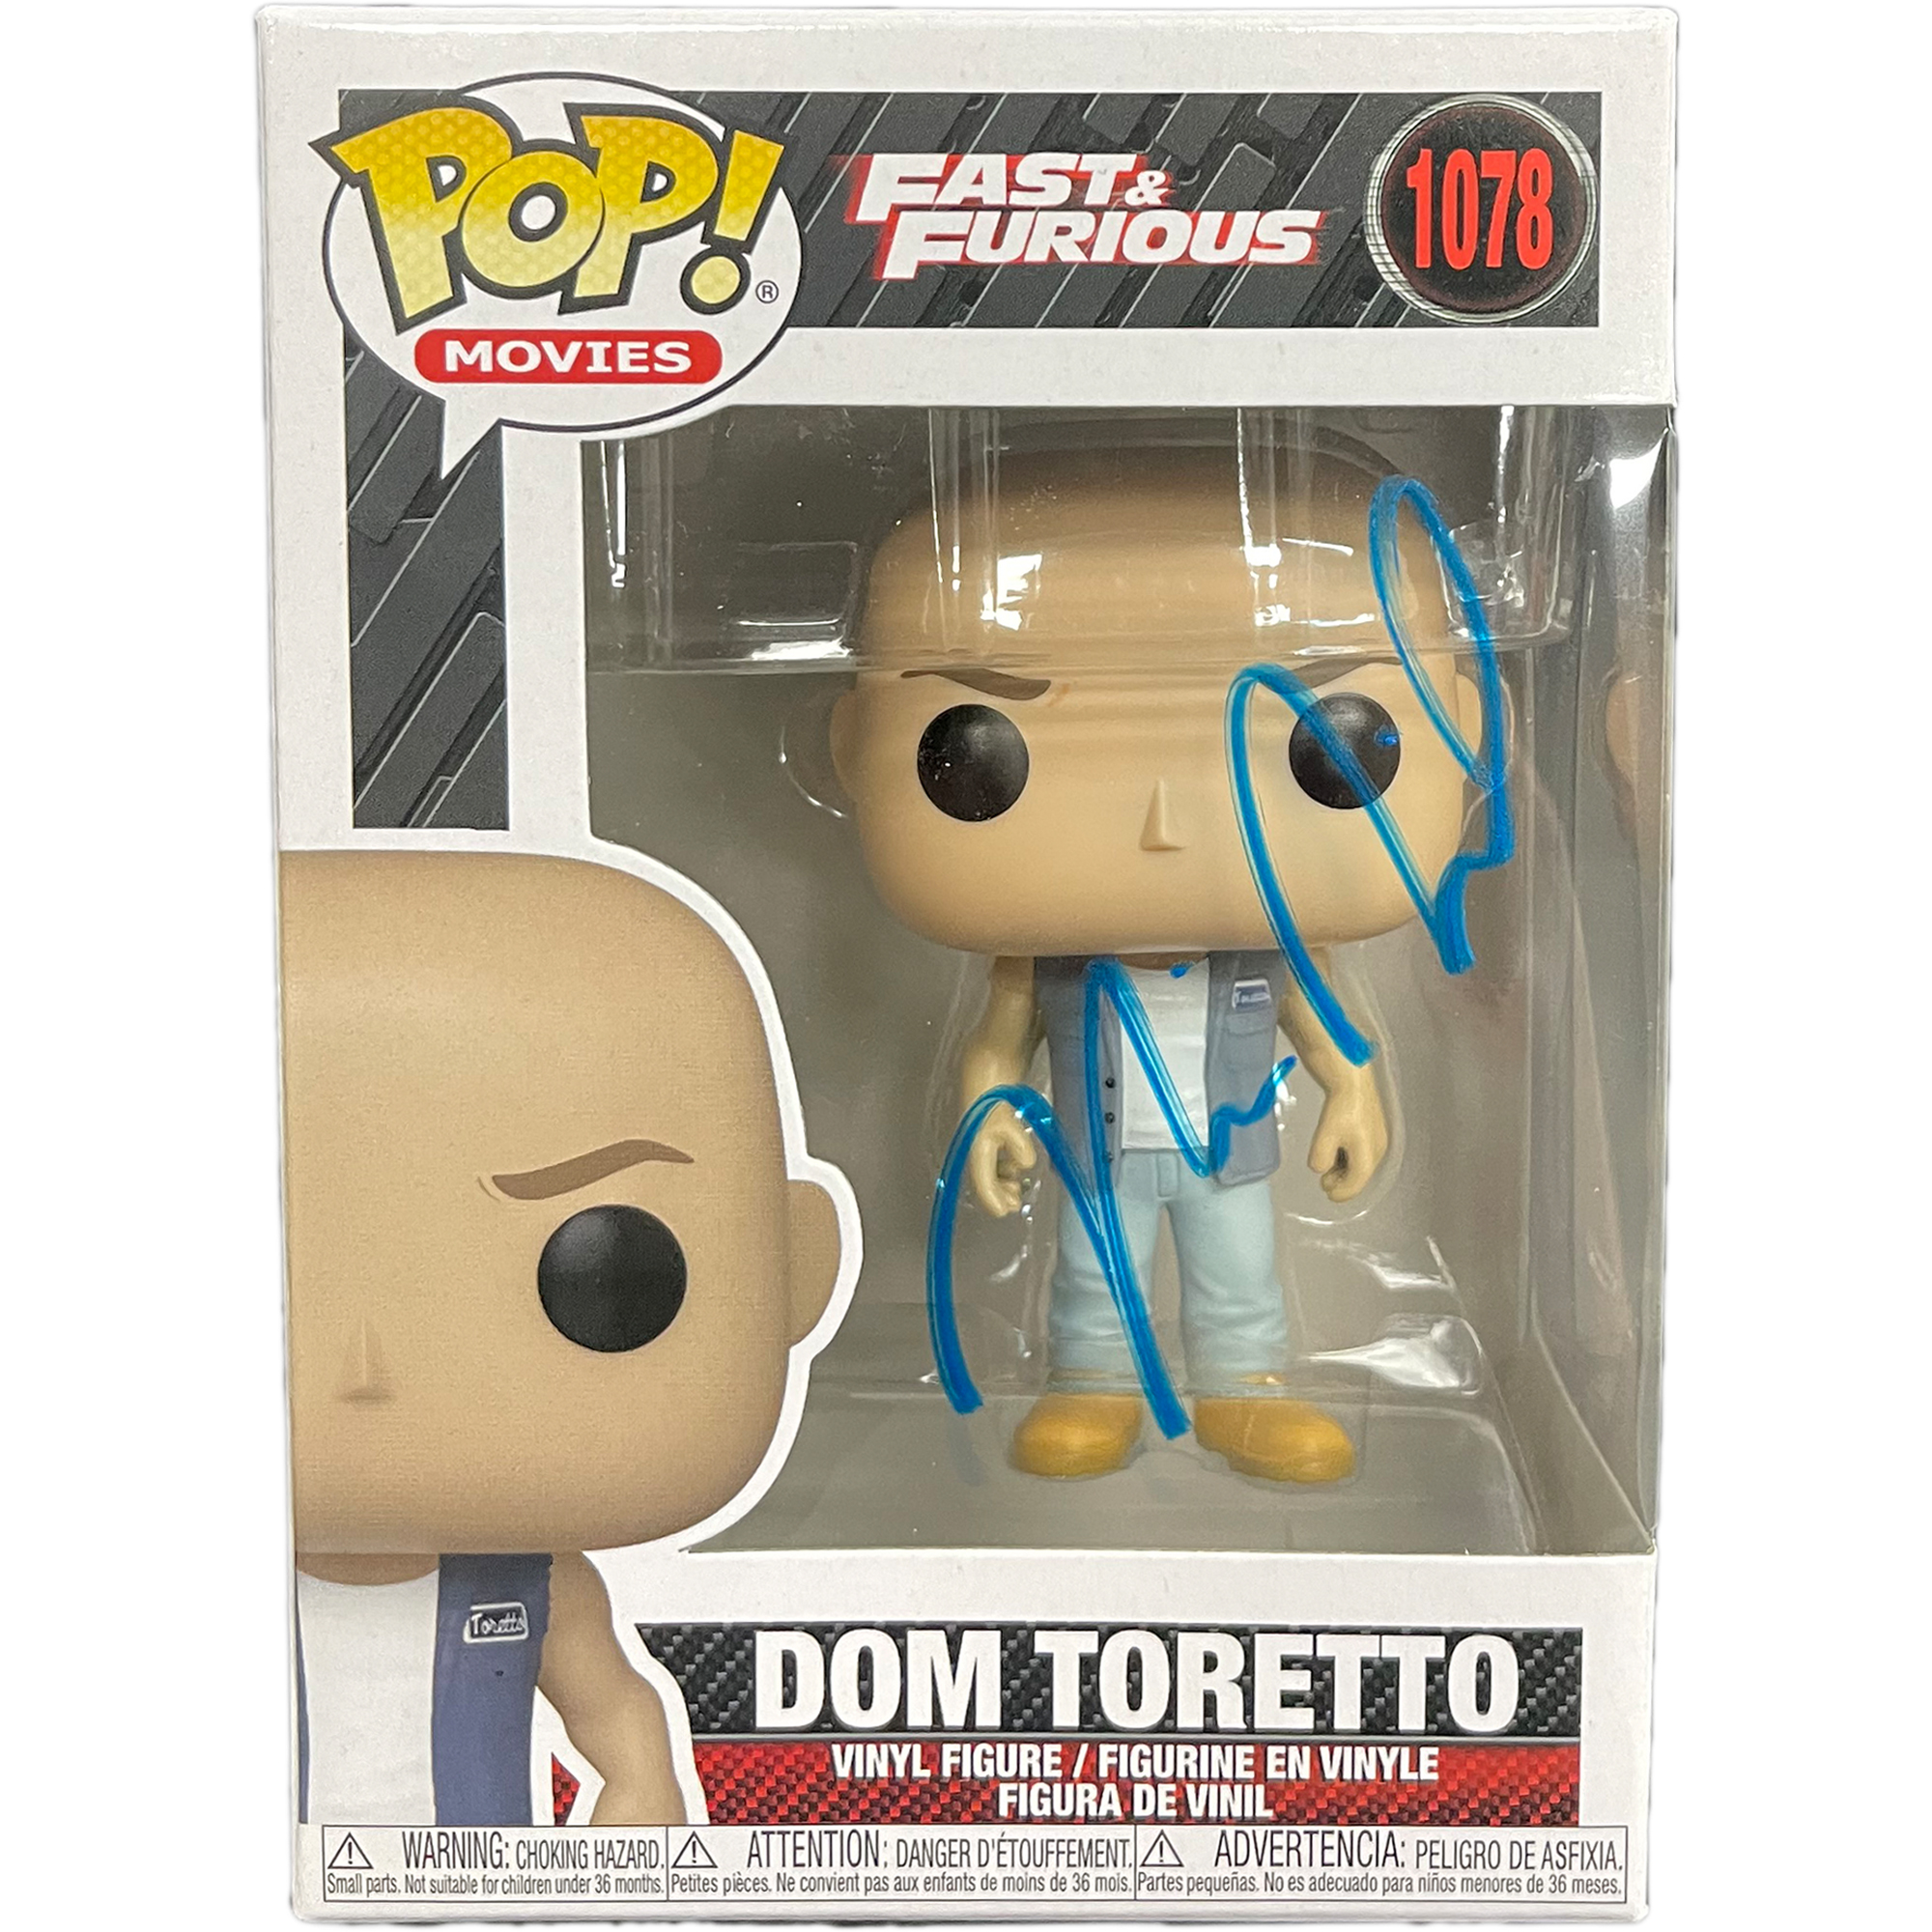 Vin Diesel – “Fast & Furious” Dom Toretto #1078...